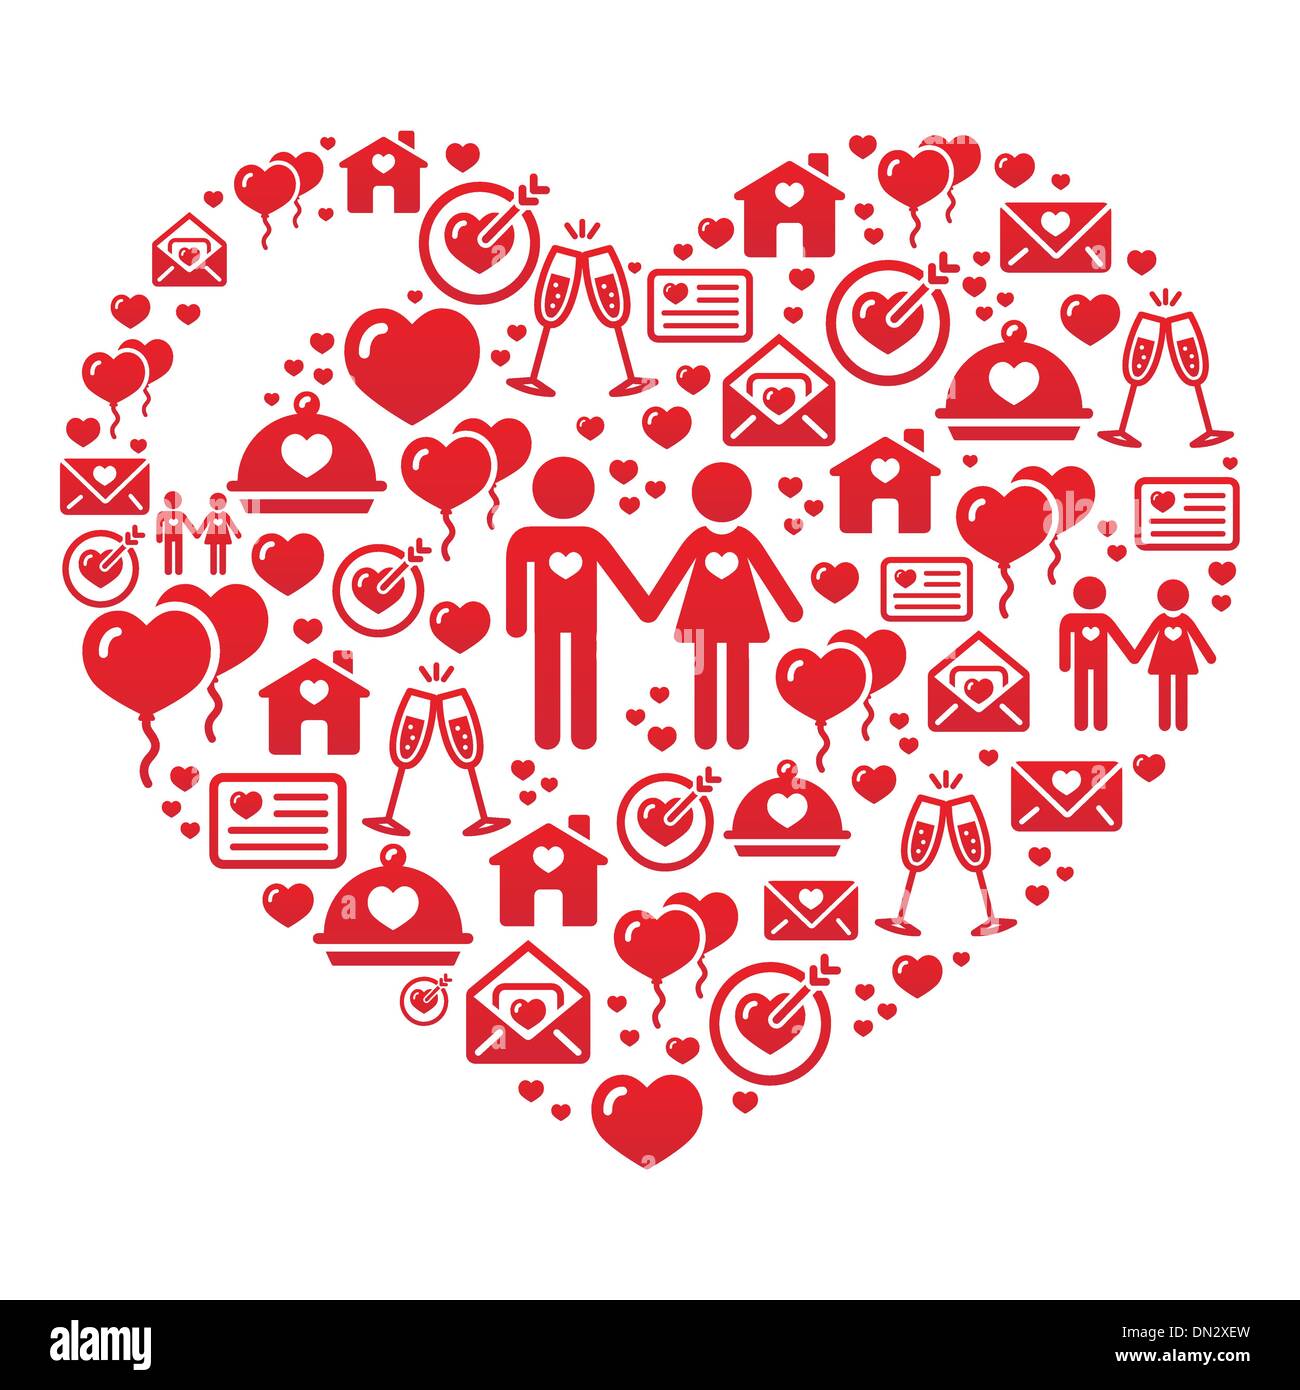 Mosaik-Herzkarte zum Valentinstag - Vektor Stock Vektor